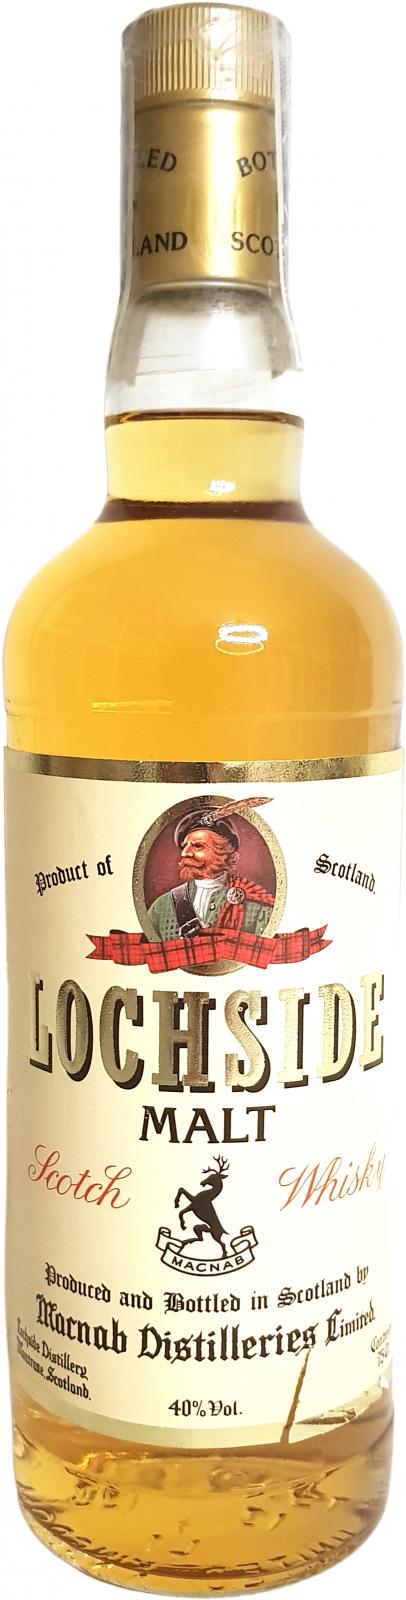 Lochside NAS Malt Scotch Whisky 40% 750ml